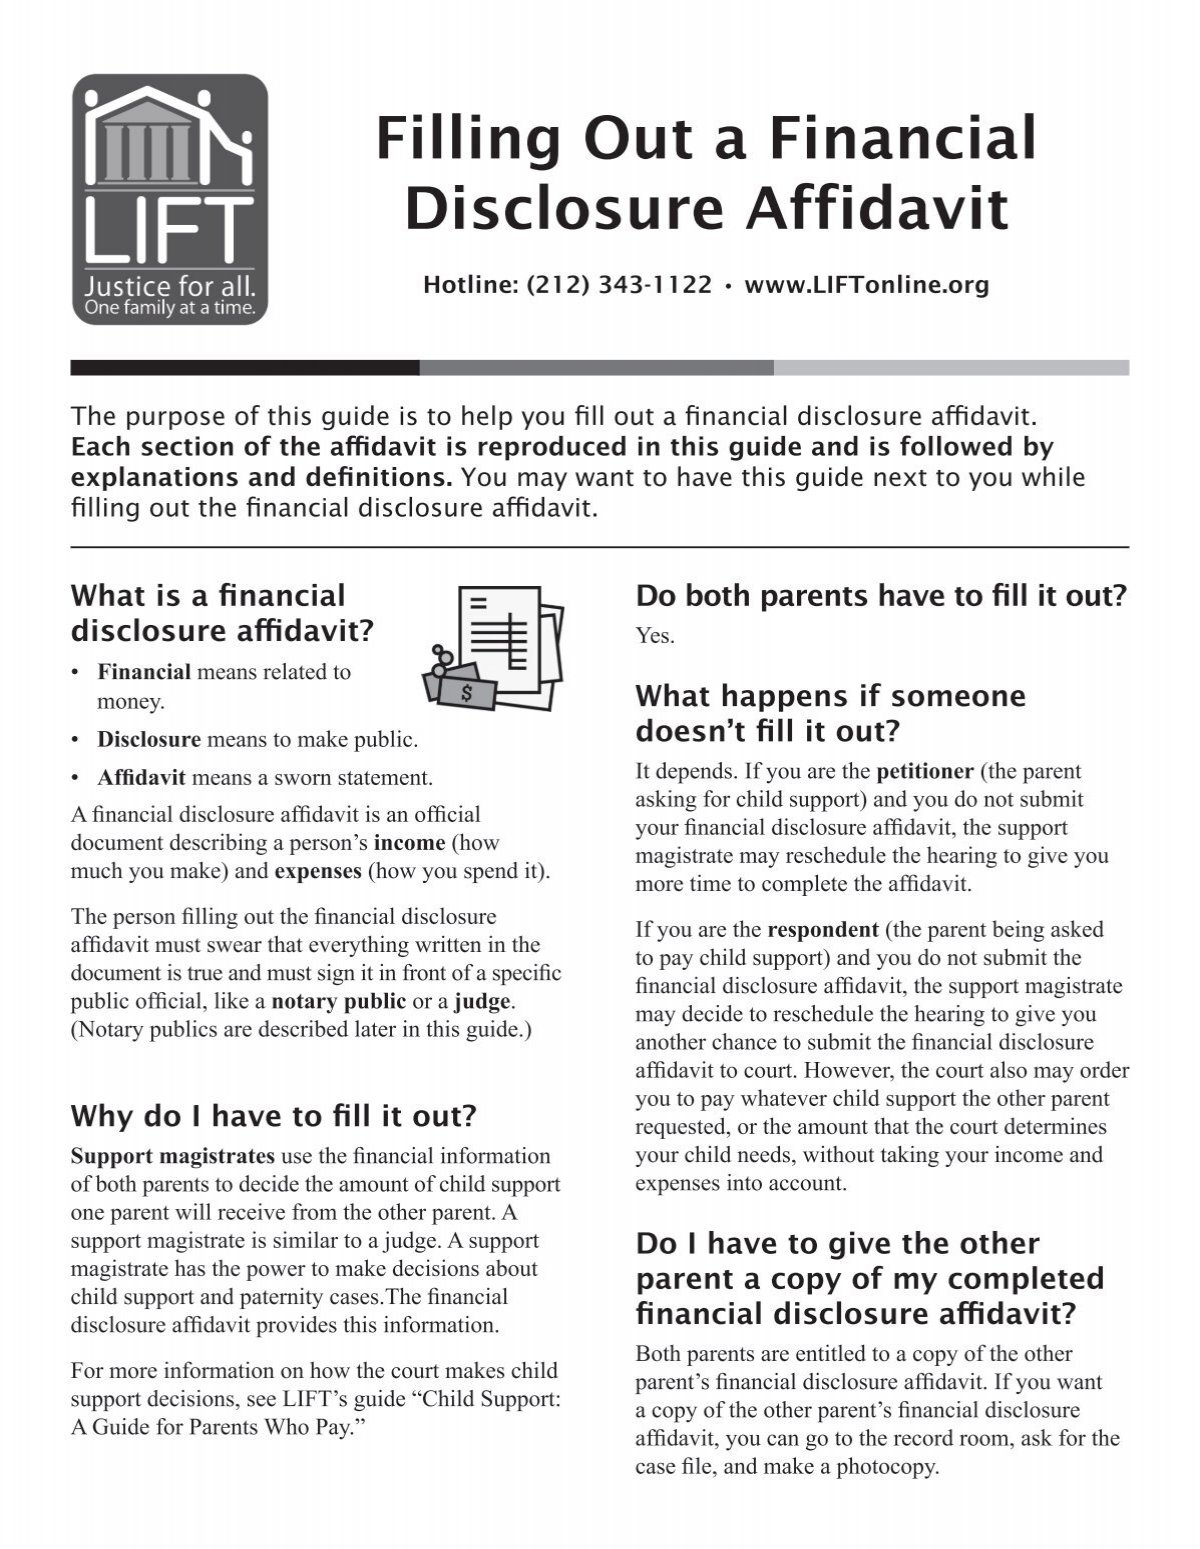 filling-out-a-financial-disclosure-affidavit-lift